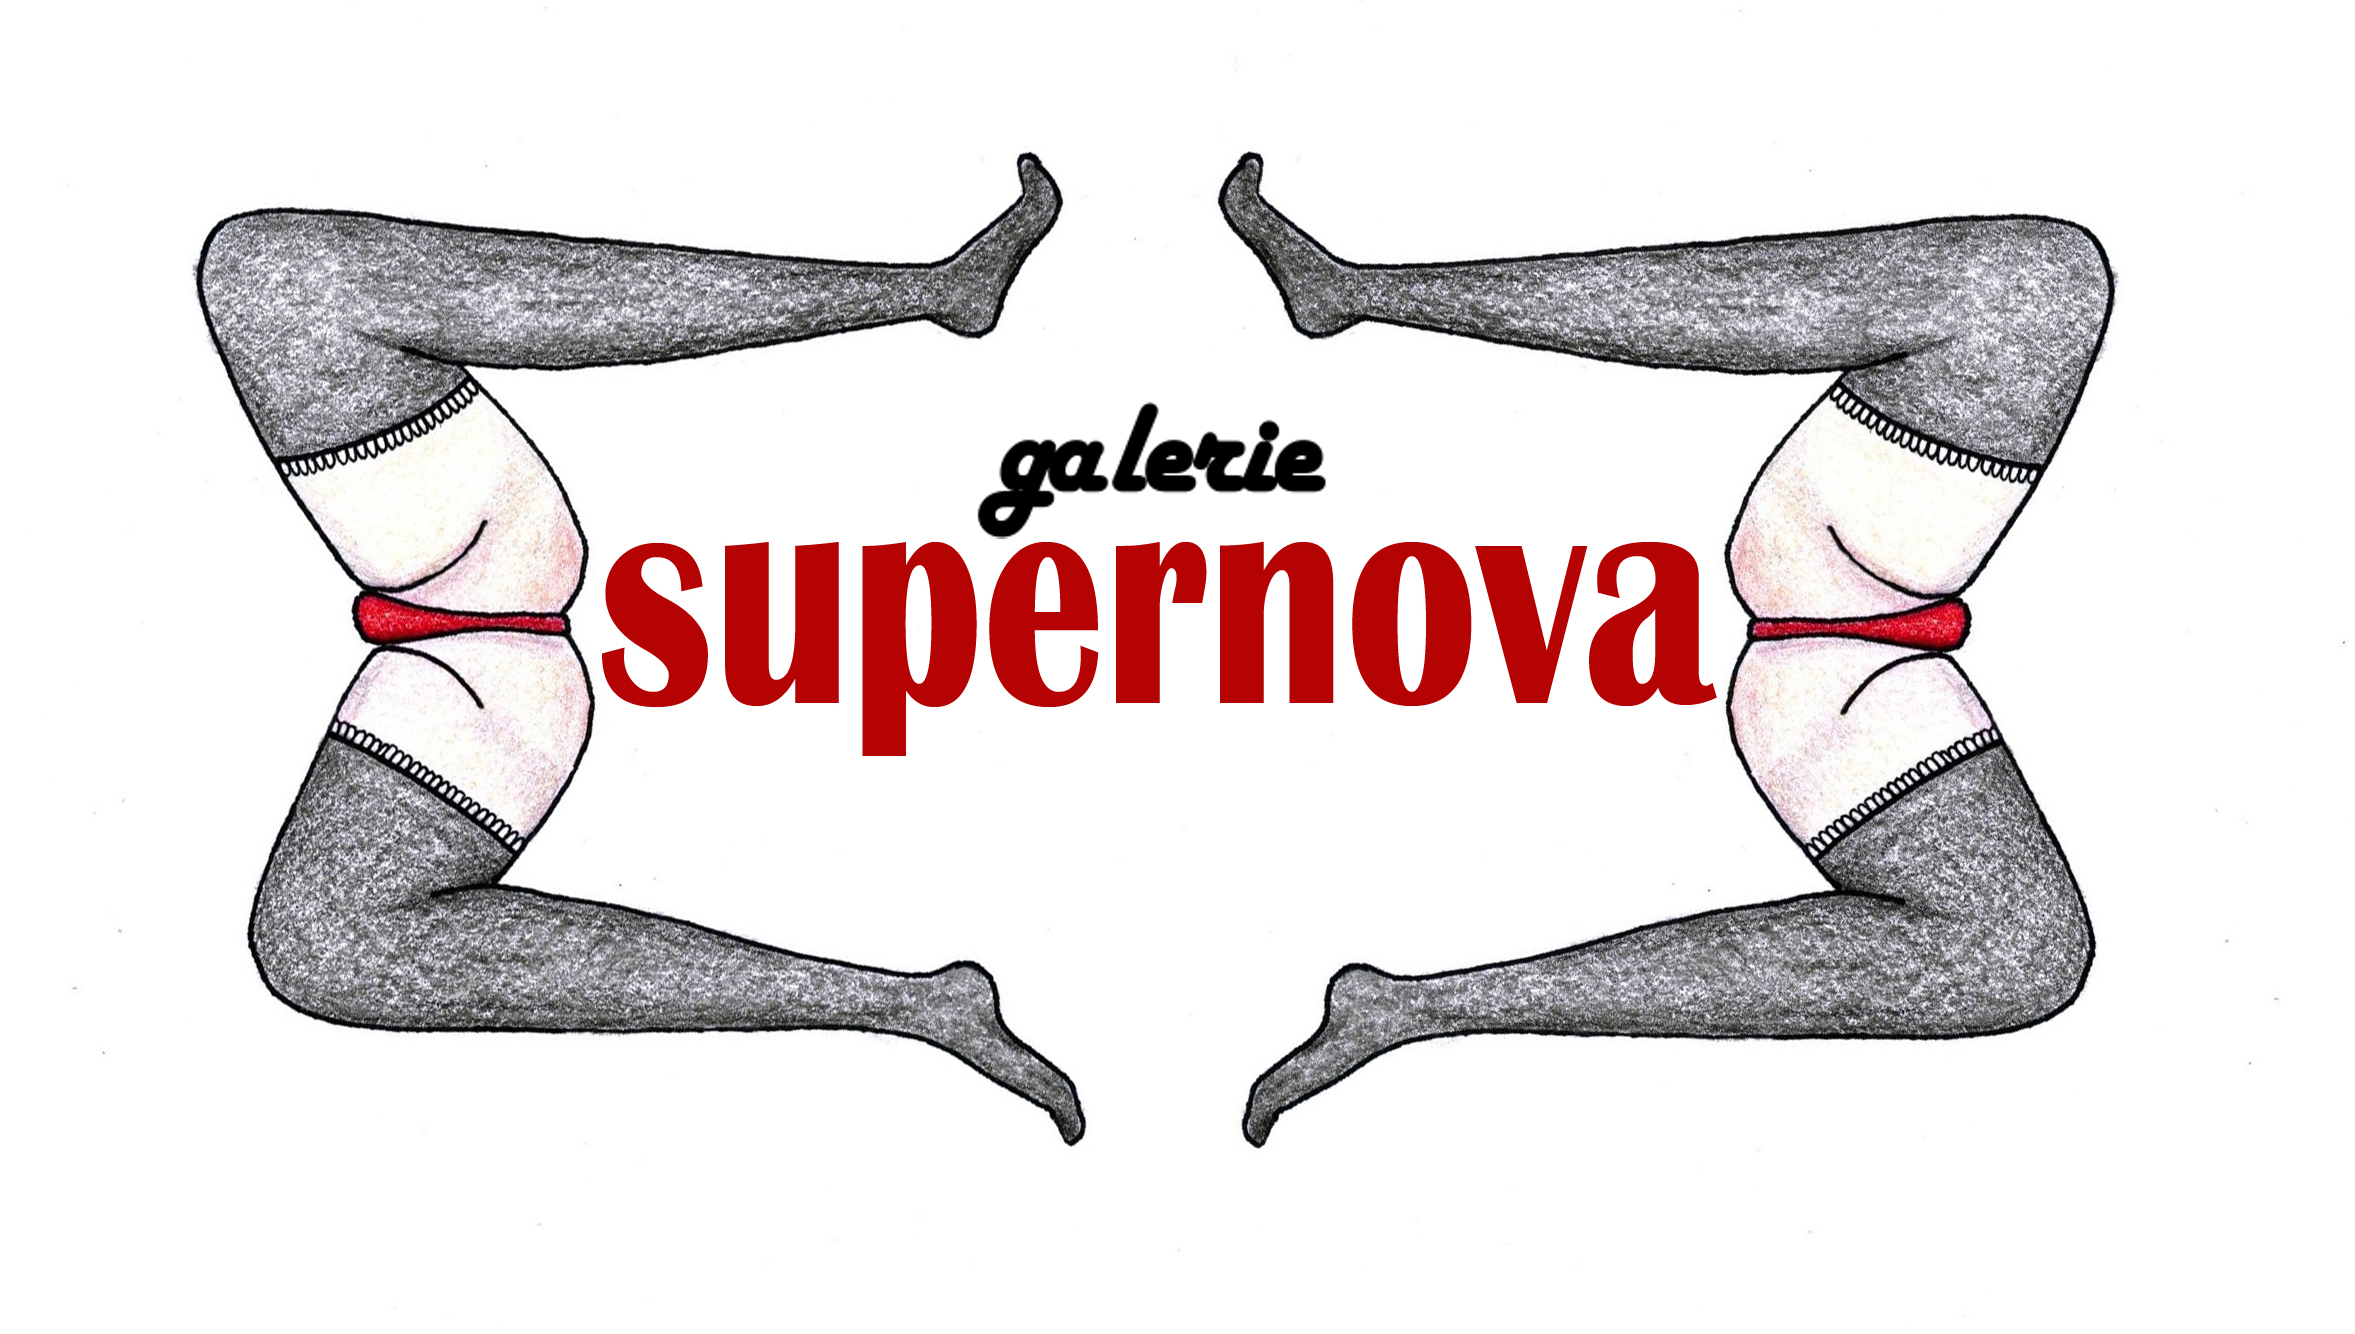 Galerie Supernova